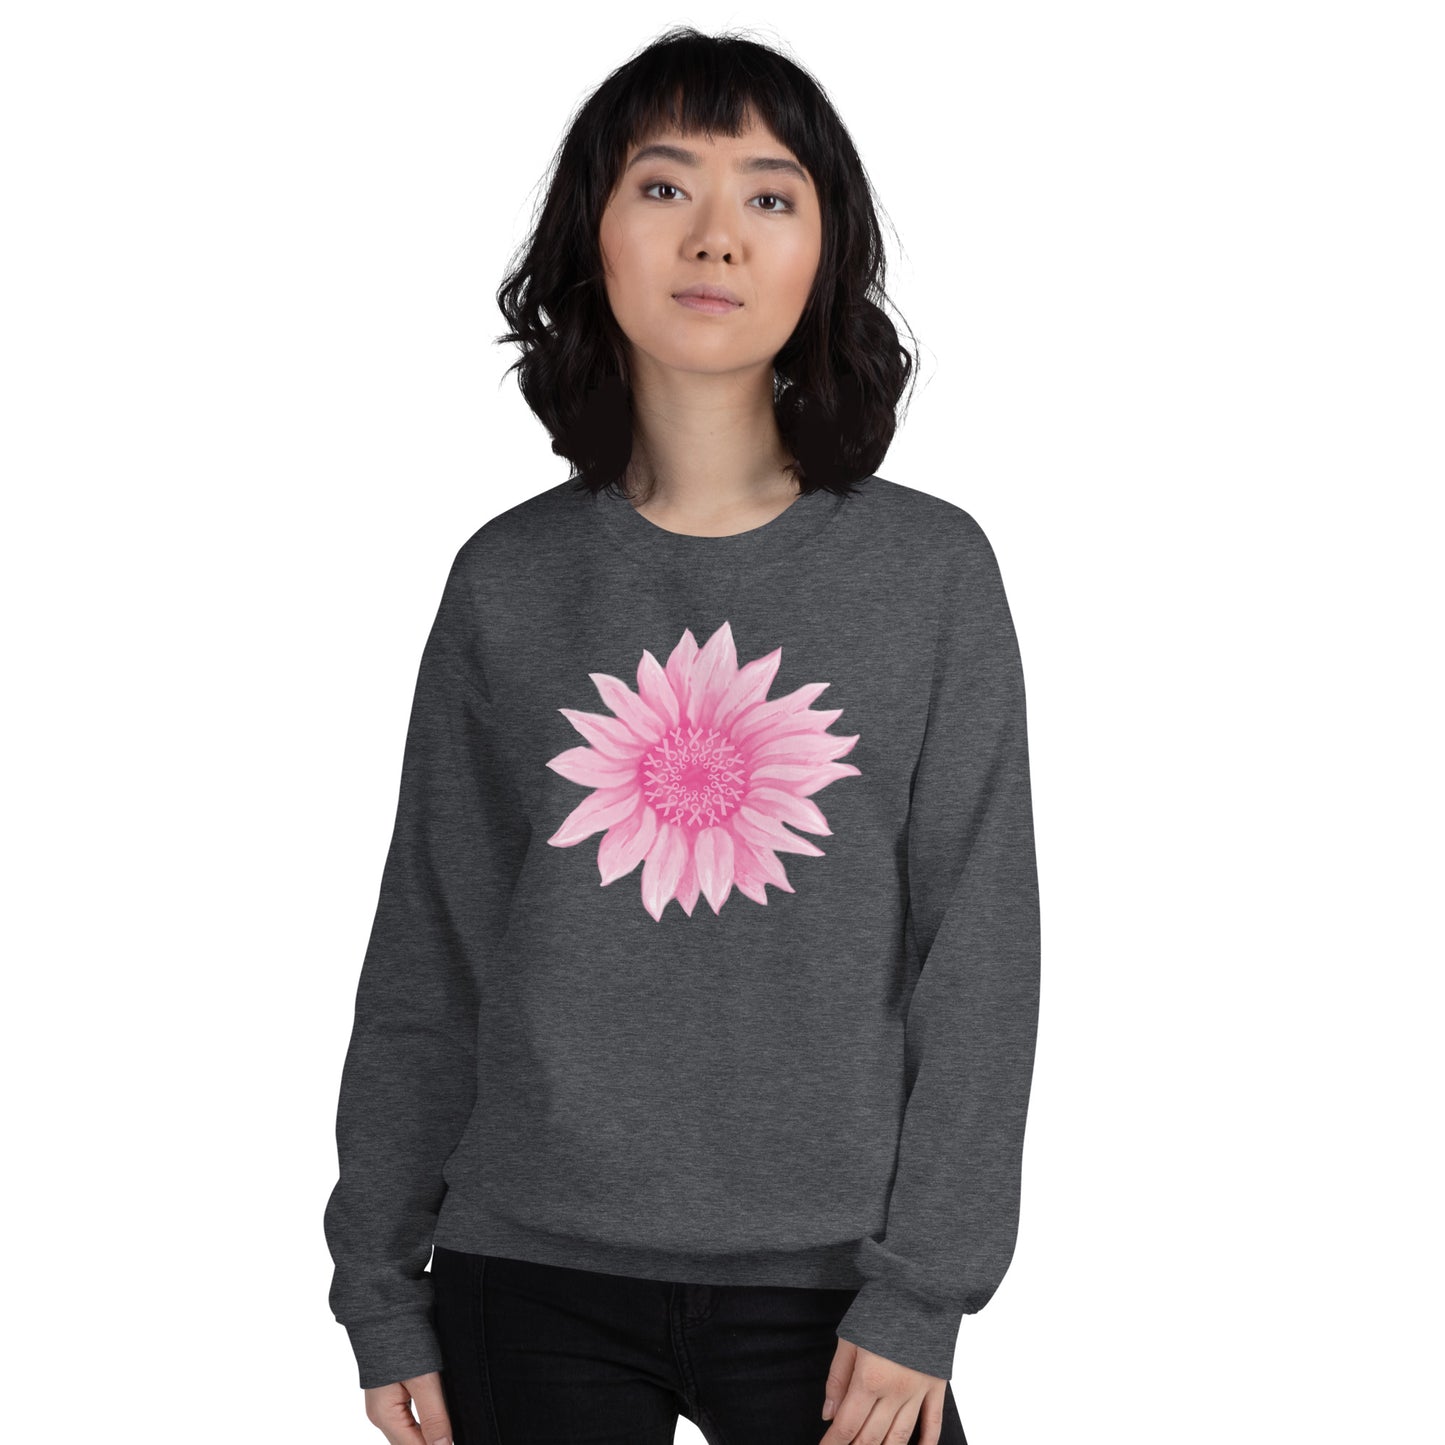 Pink Ribbon Sunflower Crewneck Sweatshirt